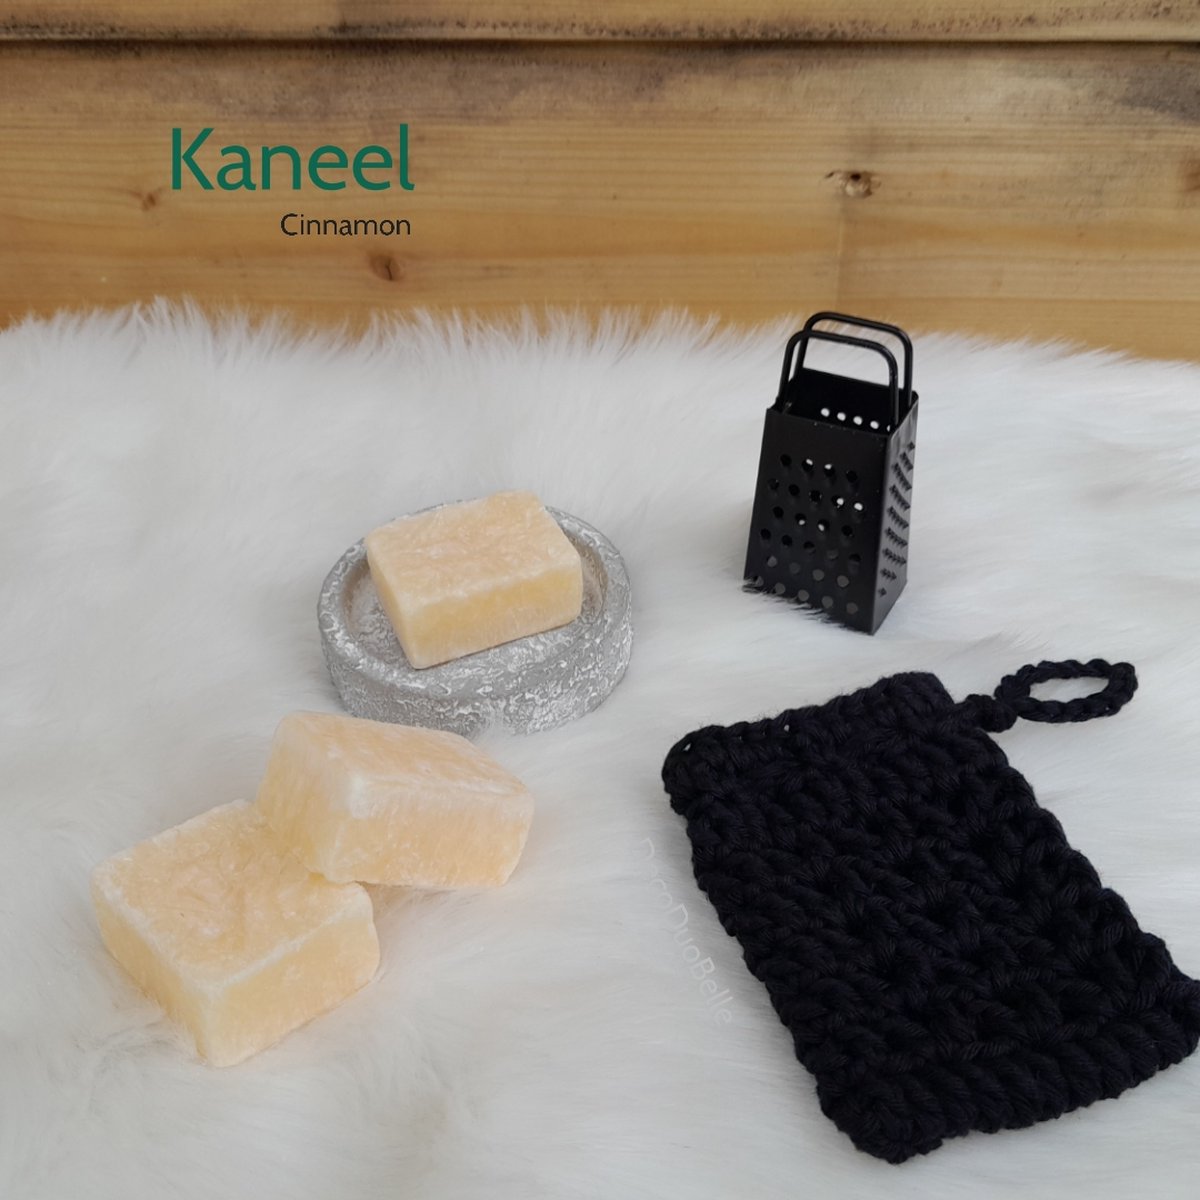 3 Amberblokjes Kaneel - Geurblokjes Set met Schaaltje, Rasp en Gehaakt Geurzakje - Giftset